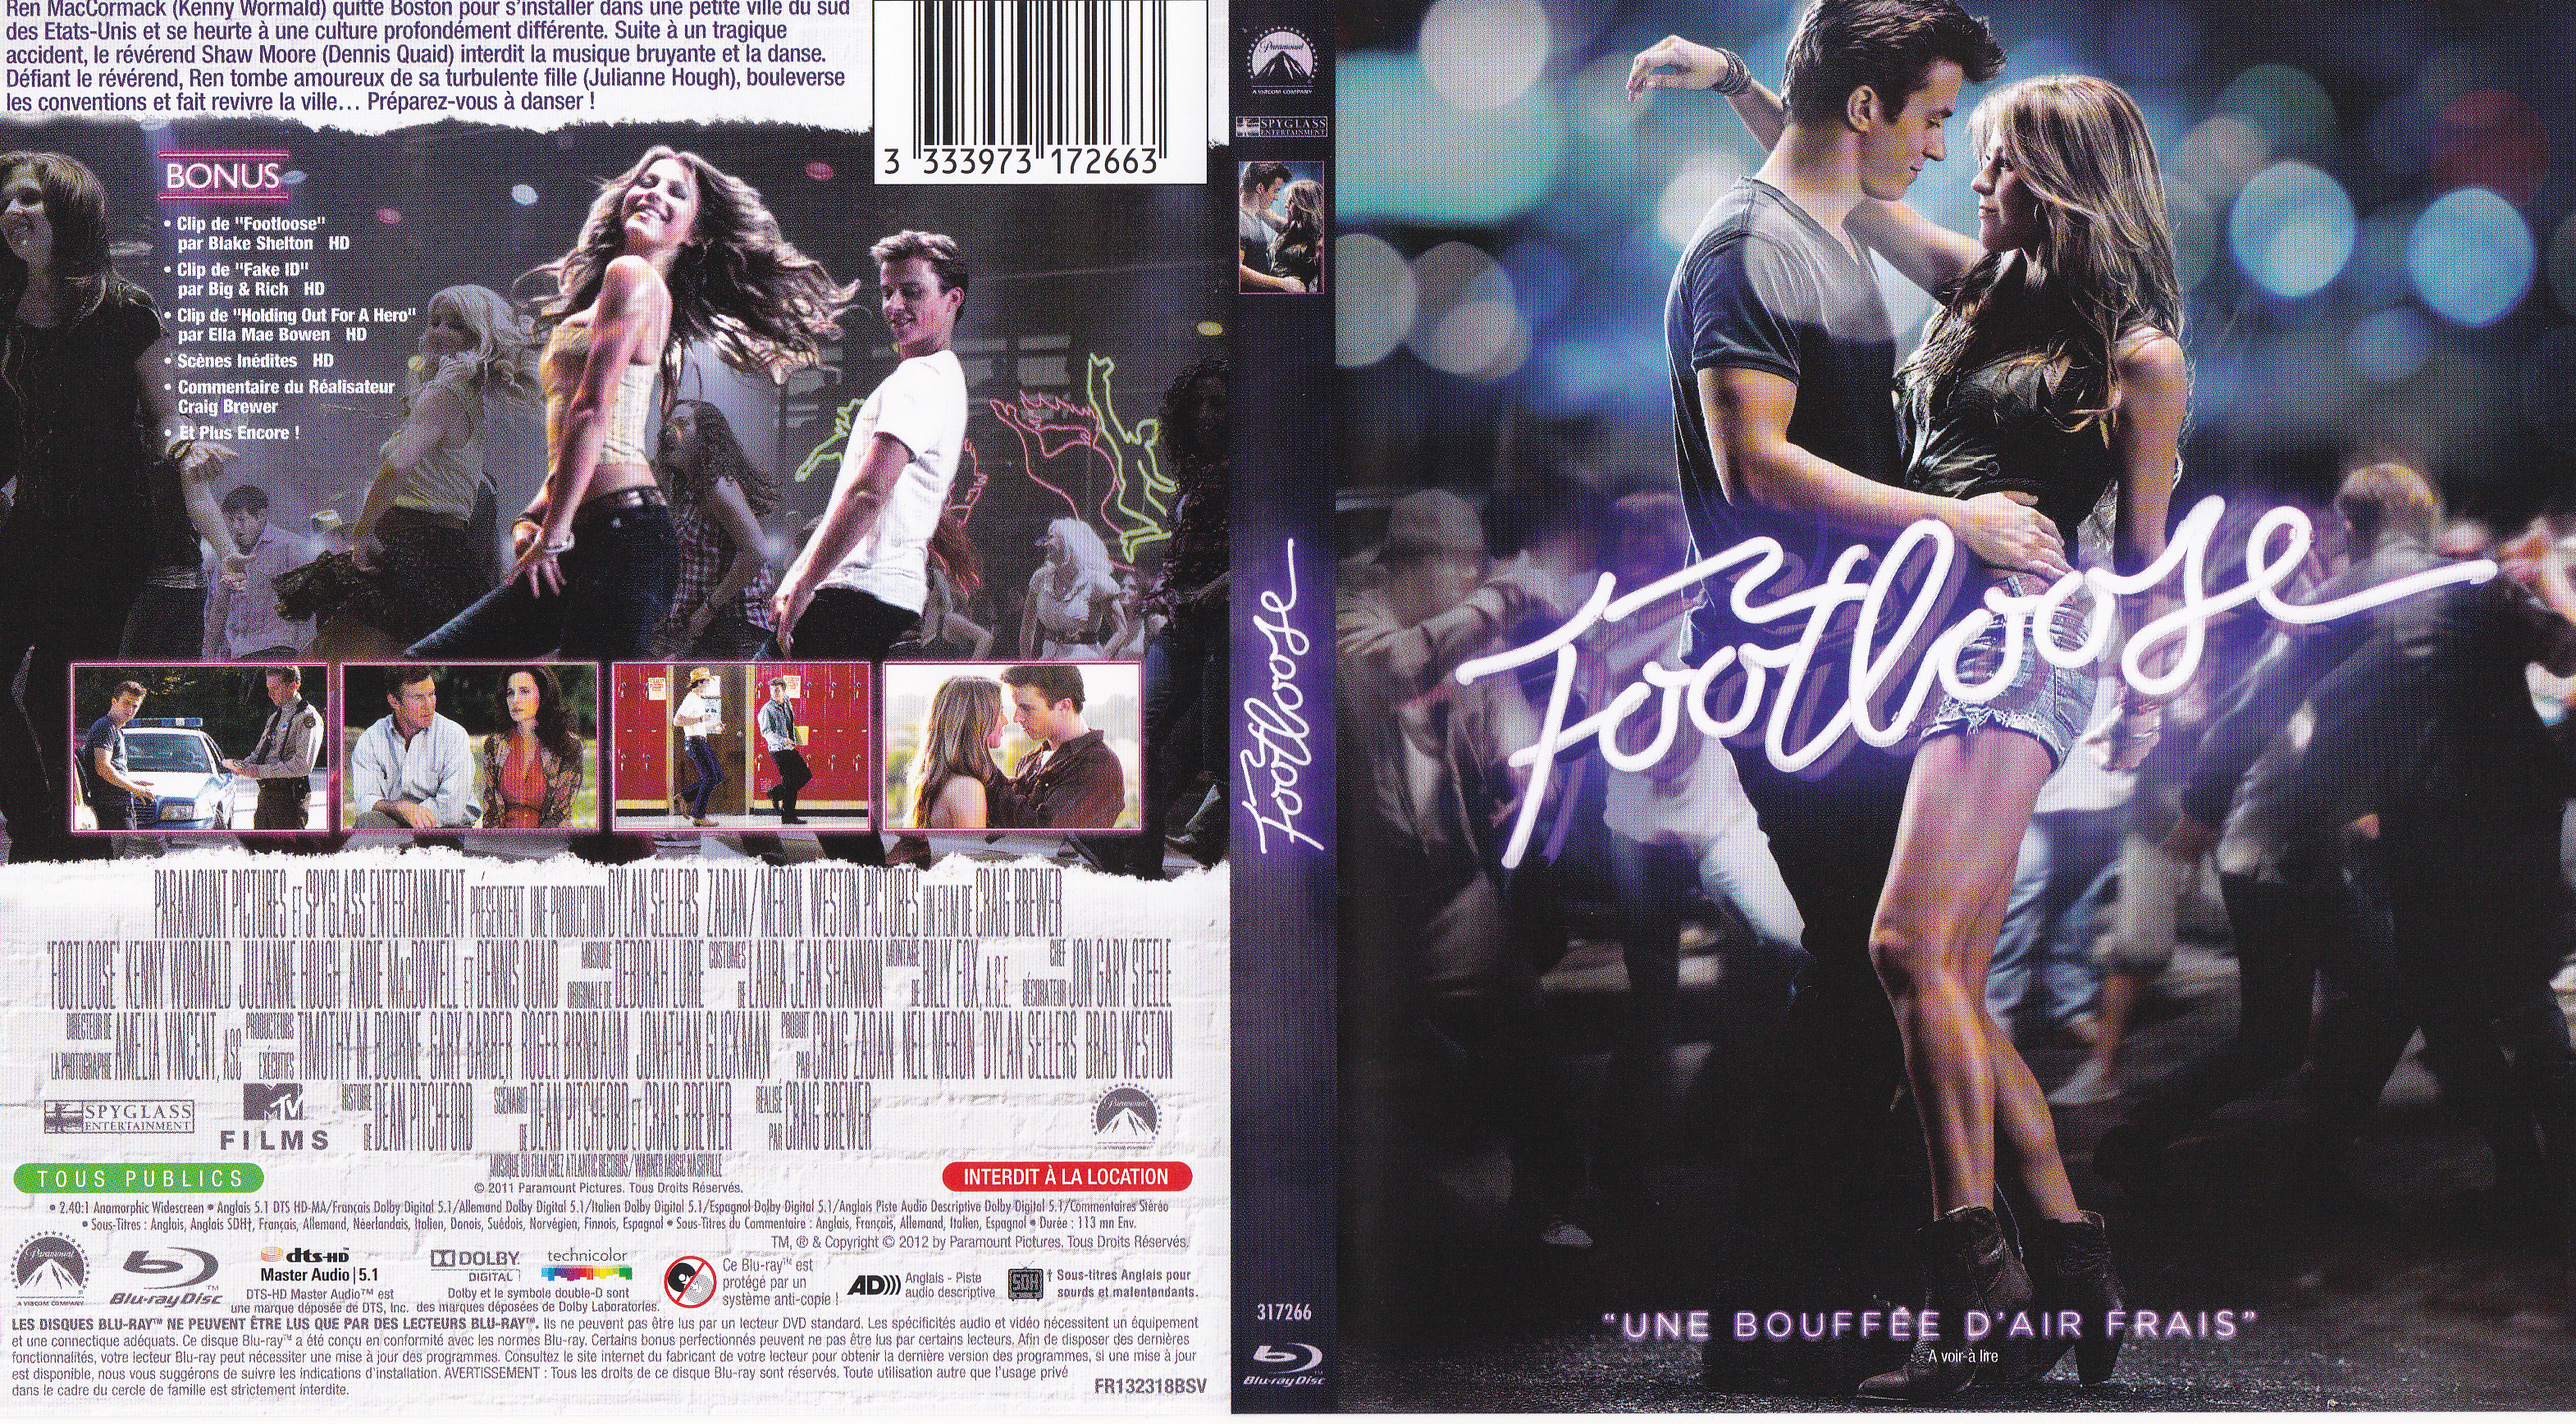 Jaquette DVD Footloose (2011) (BLU-RAY)